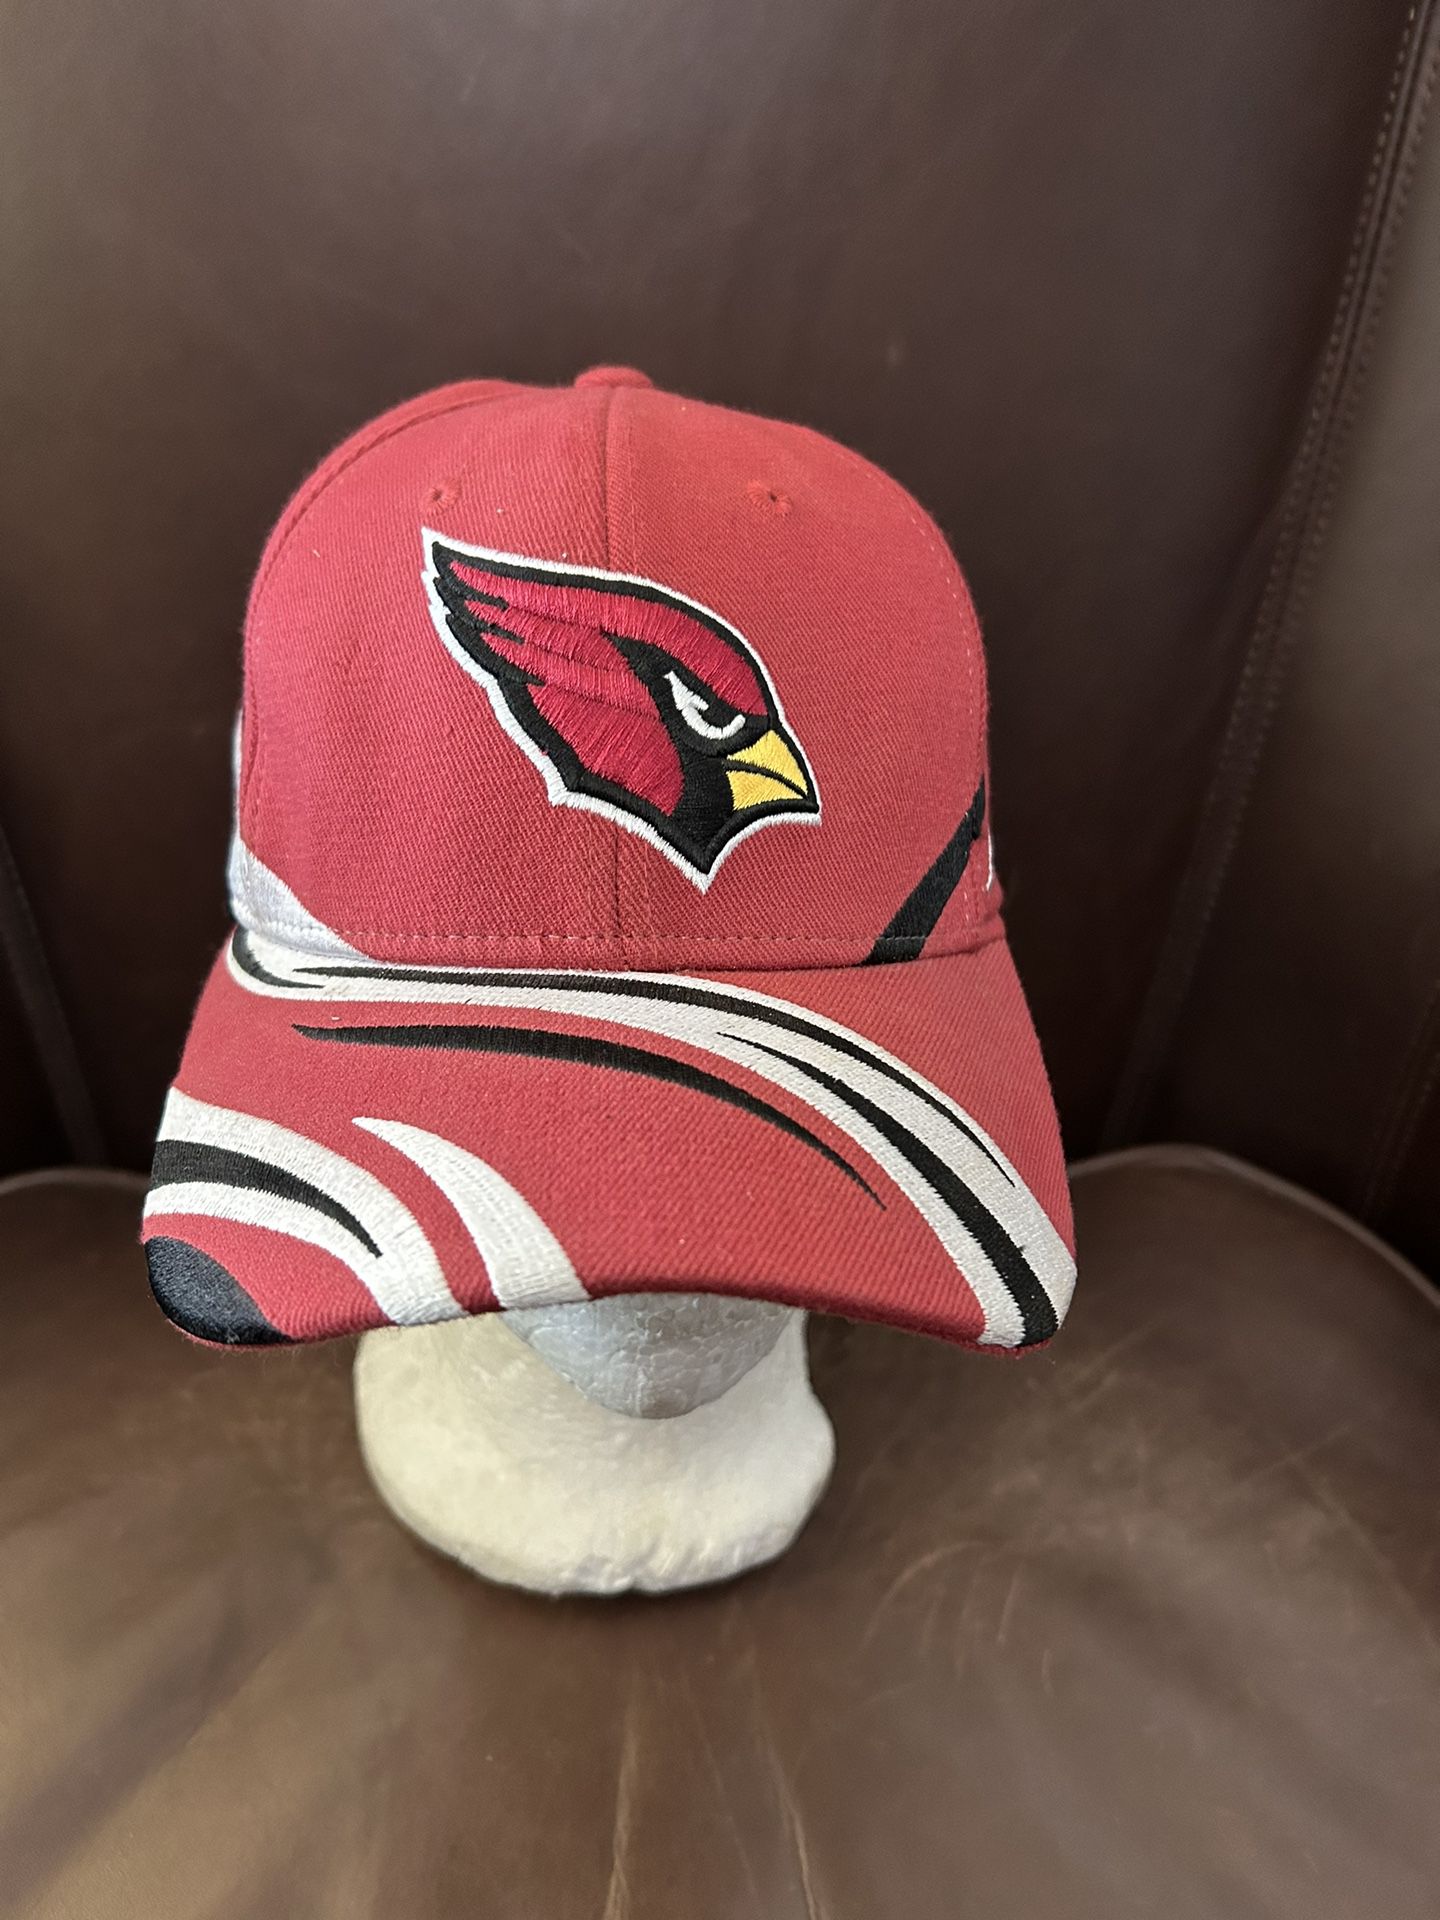 Vintage Reebok Arizona Cardinal Fitted Hat